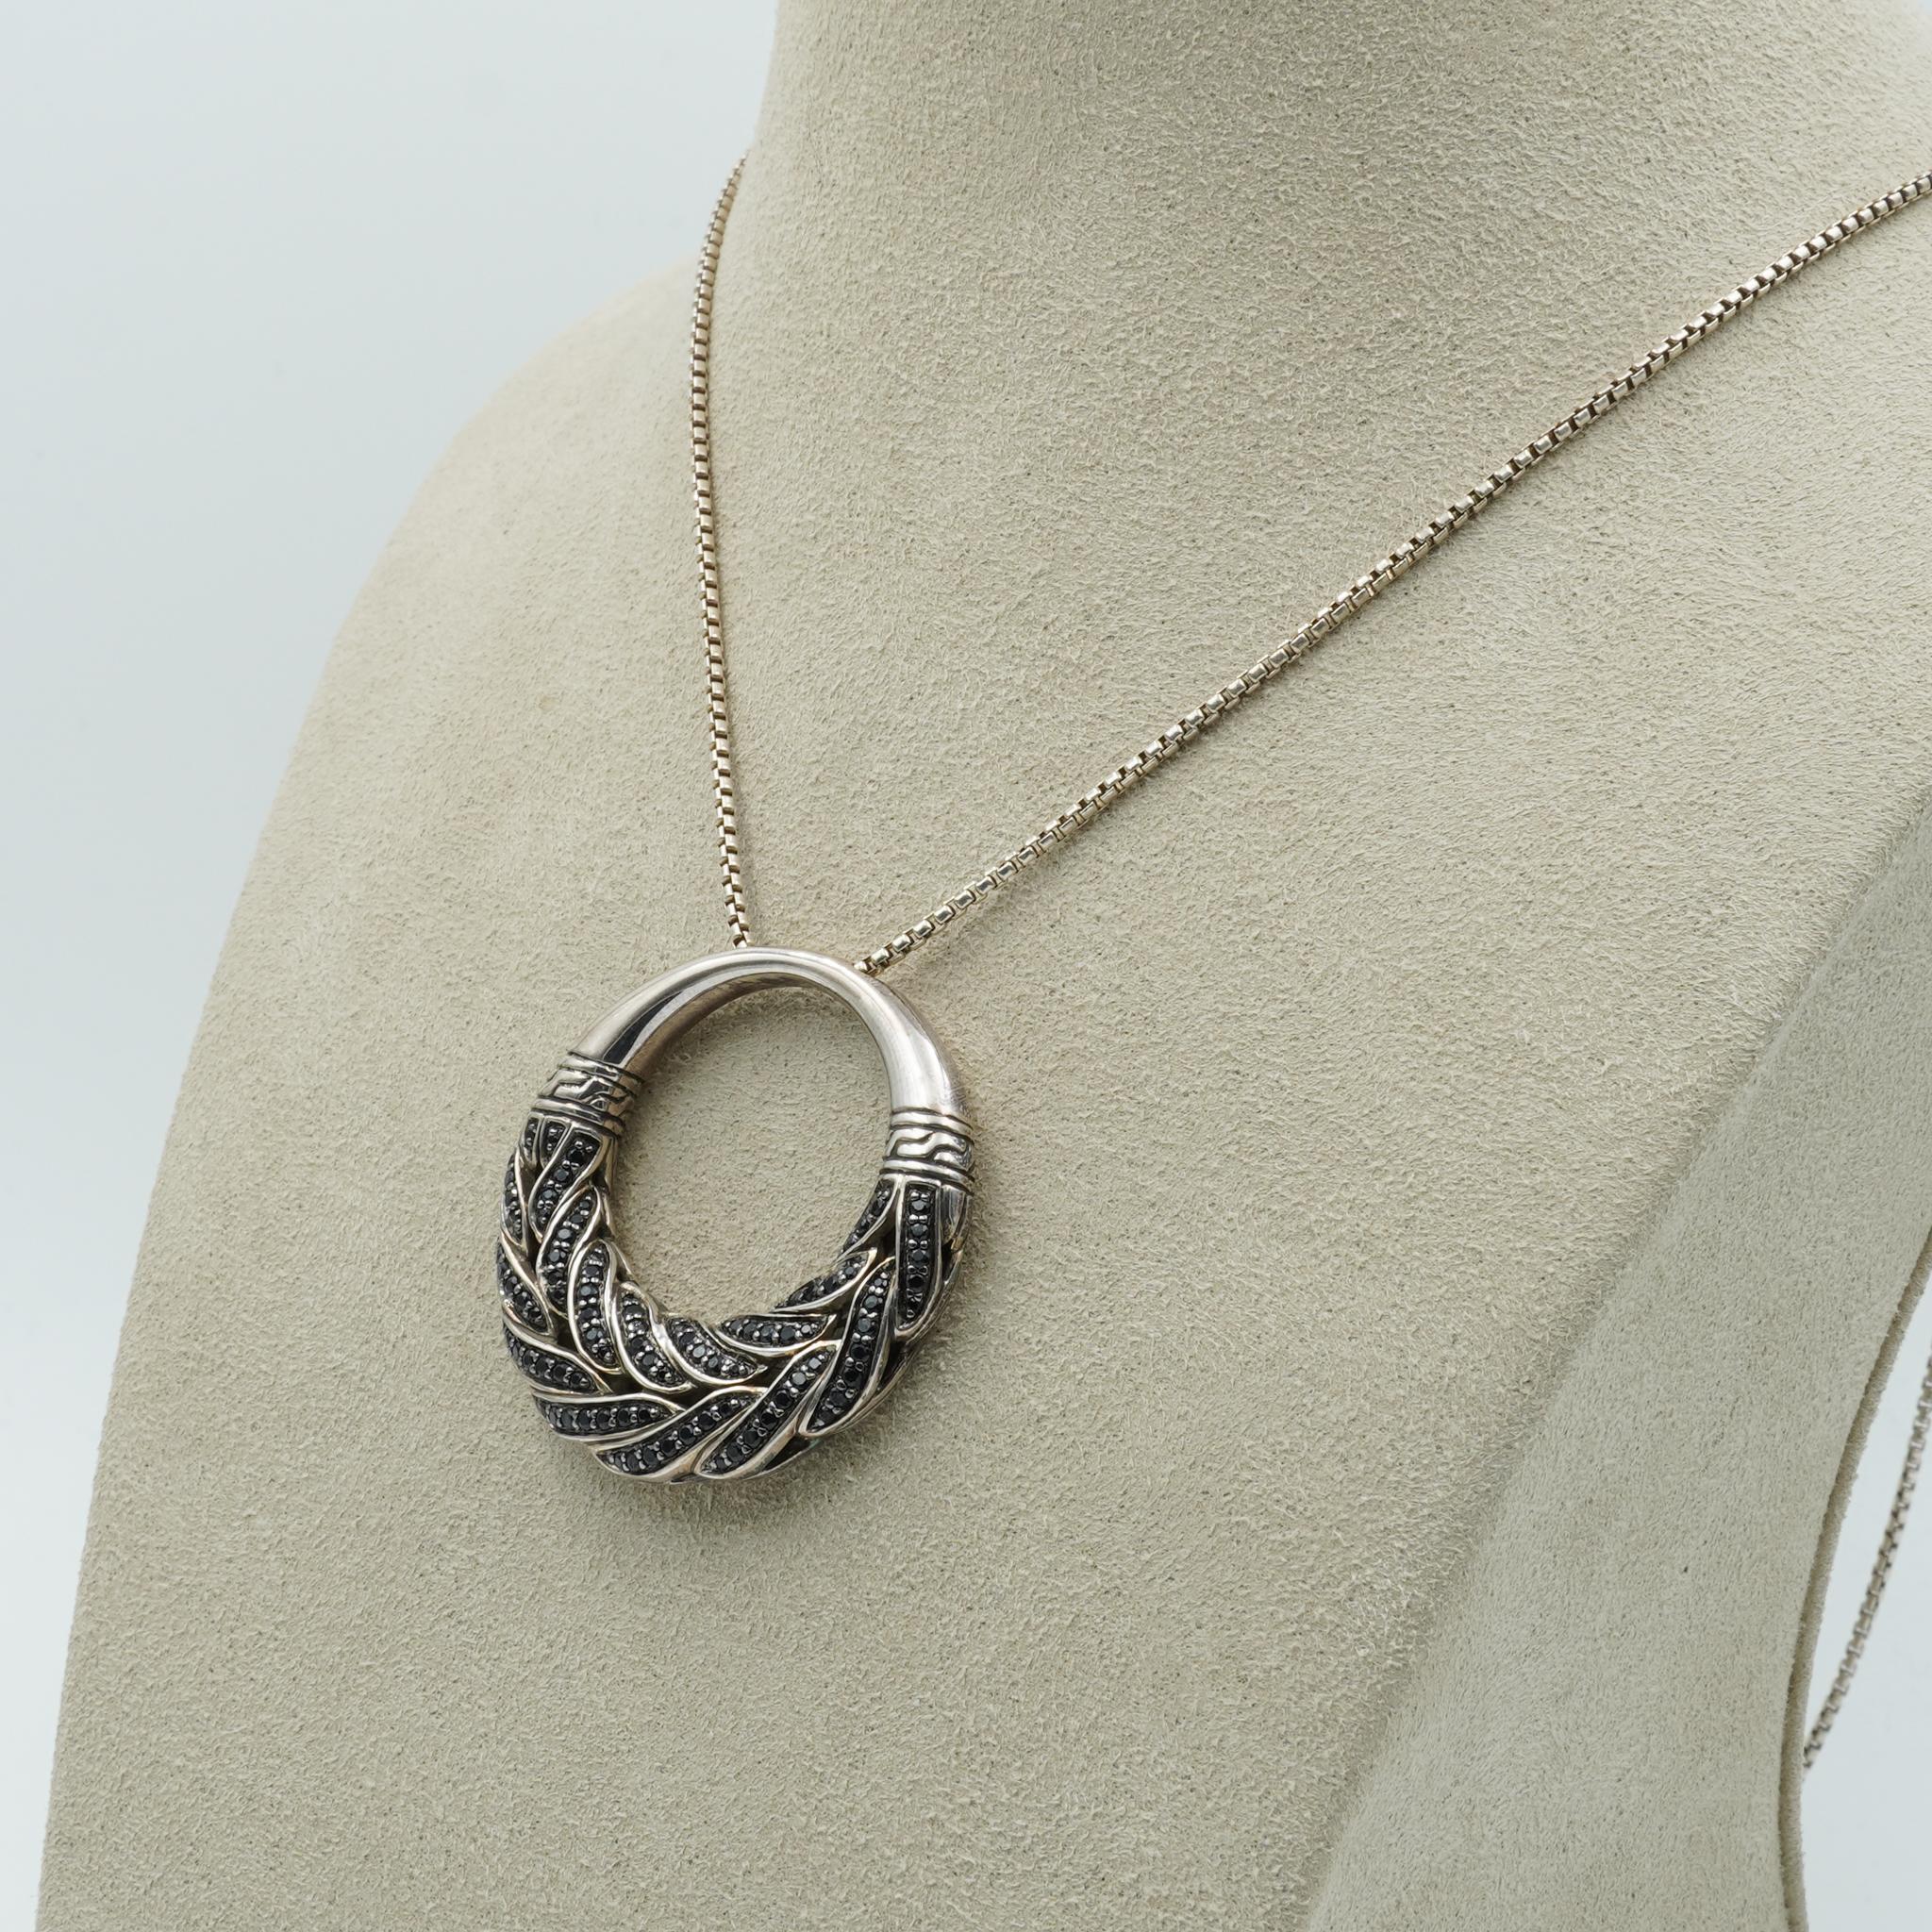 Women's John Hardy Black Sapphire & Black Spinel Pendant Necklace in Sterling Silver